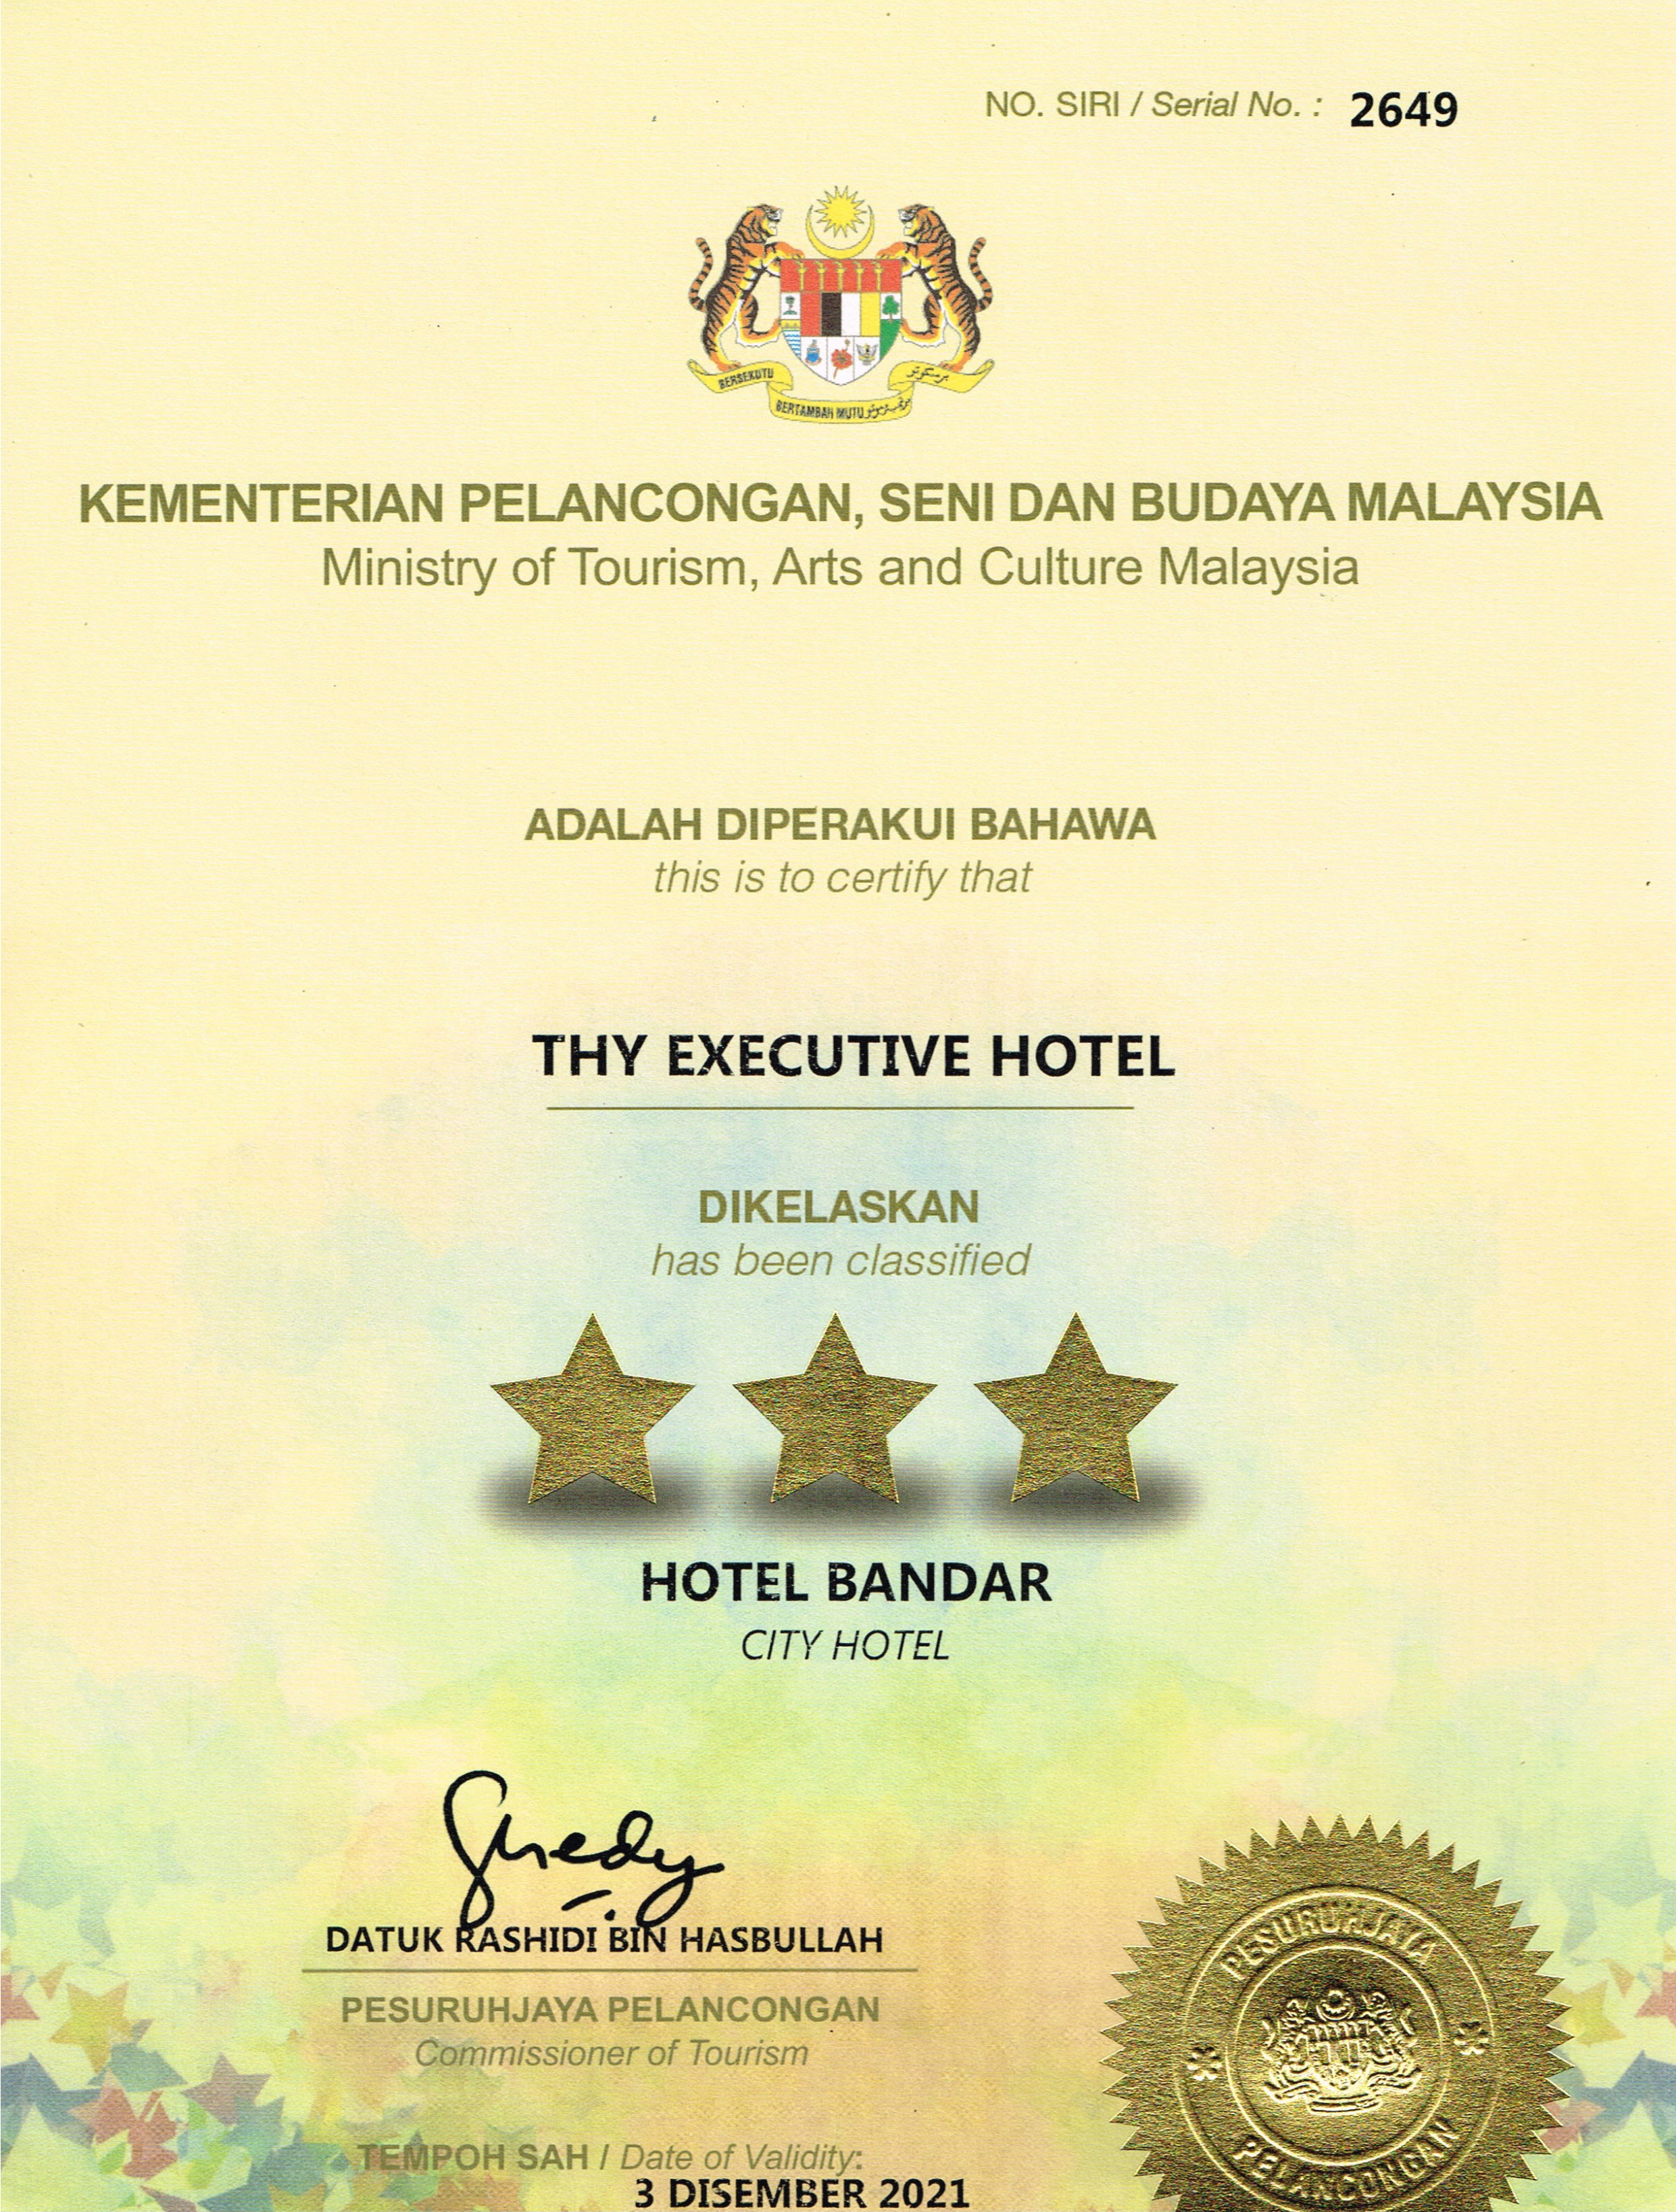 Thy Executive Hotel - A 3-star Hotel Accommodation in Plentong Johor Bahru Johor